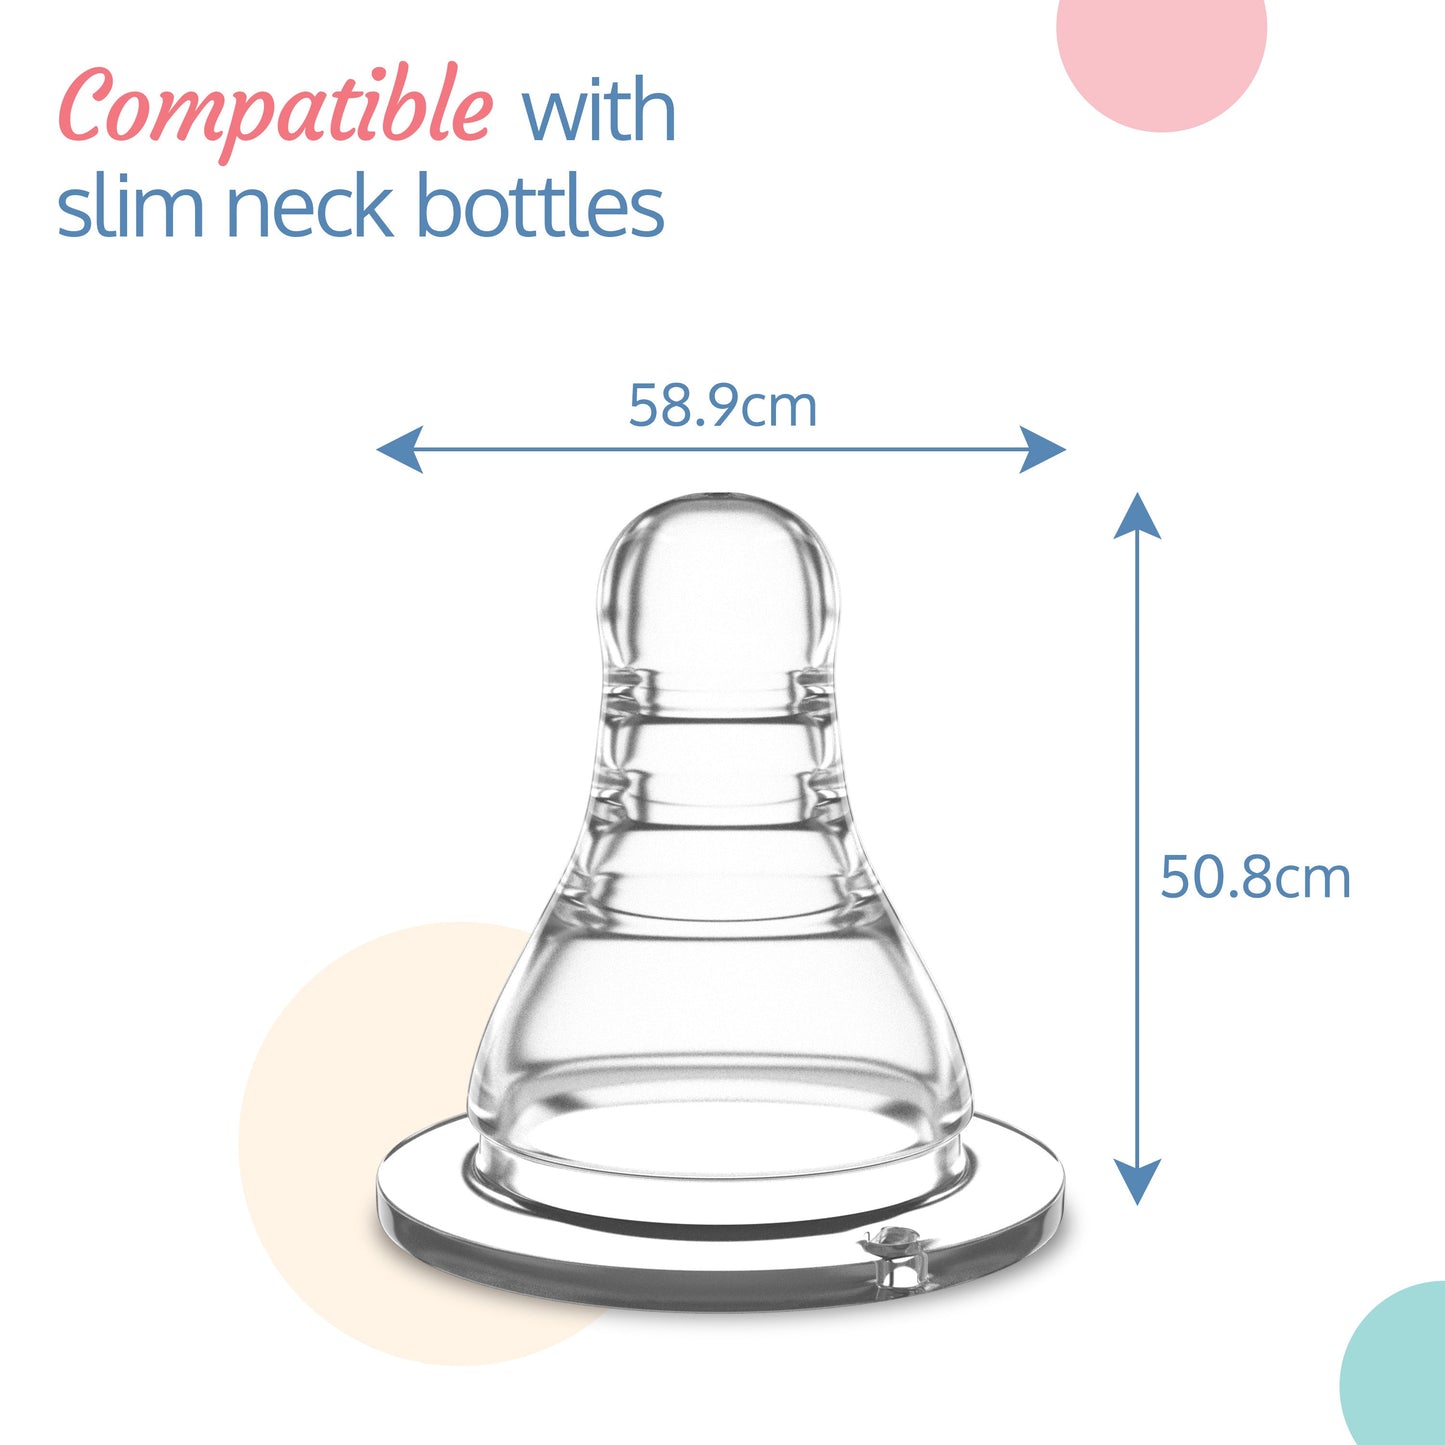 Anti-Colic Essential Teat/Nipple for Slim Neck Bottle, 4pcs, Fast Flow